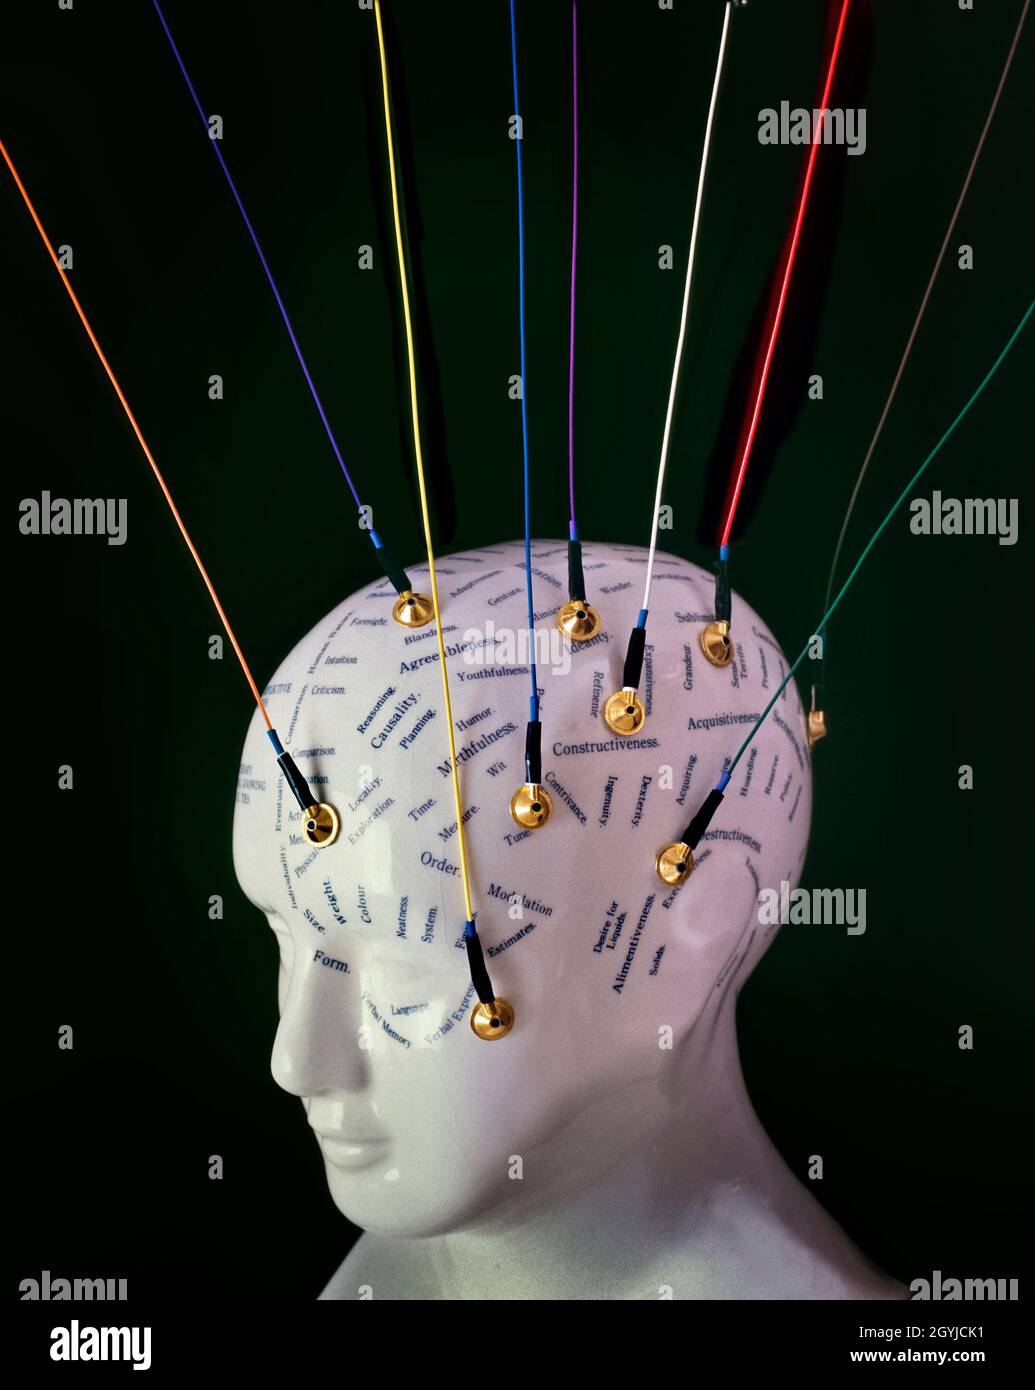 Imagen conceptual con electrodos modernos de electroencefalograma (EEG) unidos a una cabeza de froenología de cerámica. Foto de stock